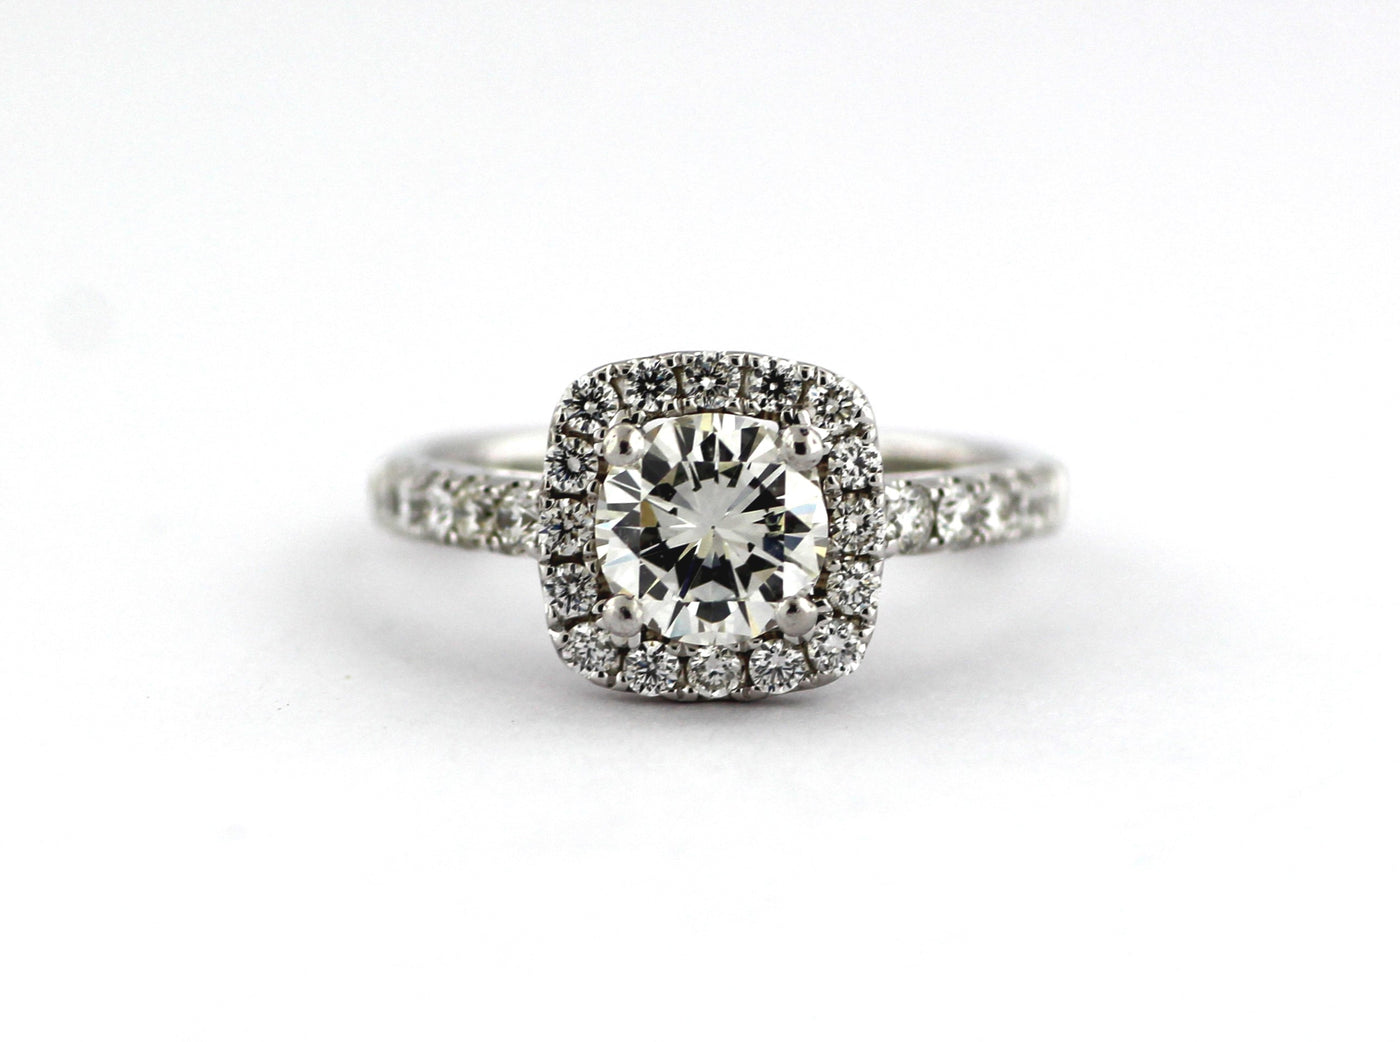 18Kw 1.76 Cttw Diamond Engagement Ring